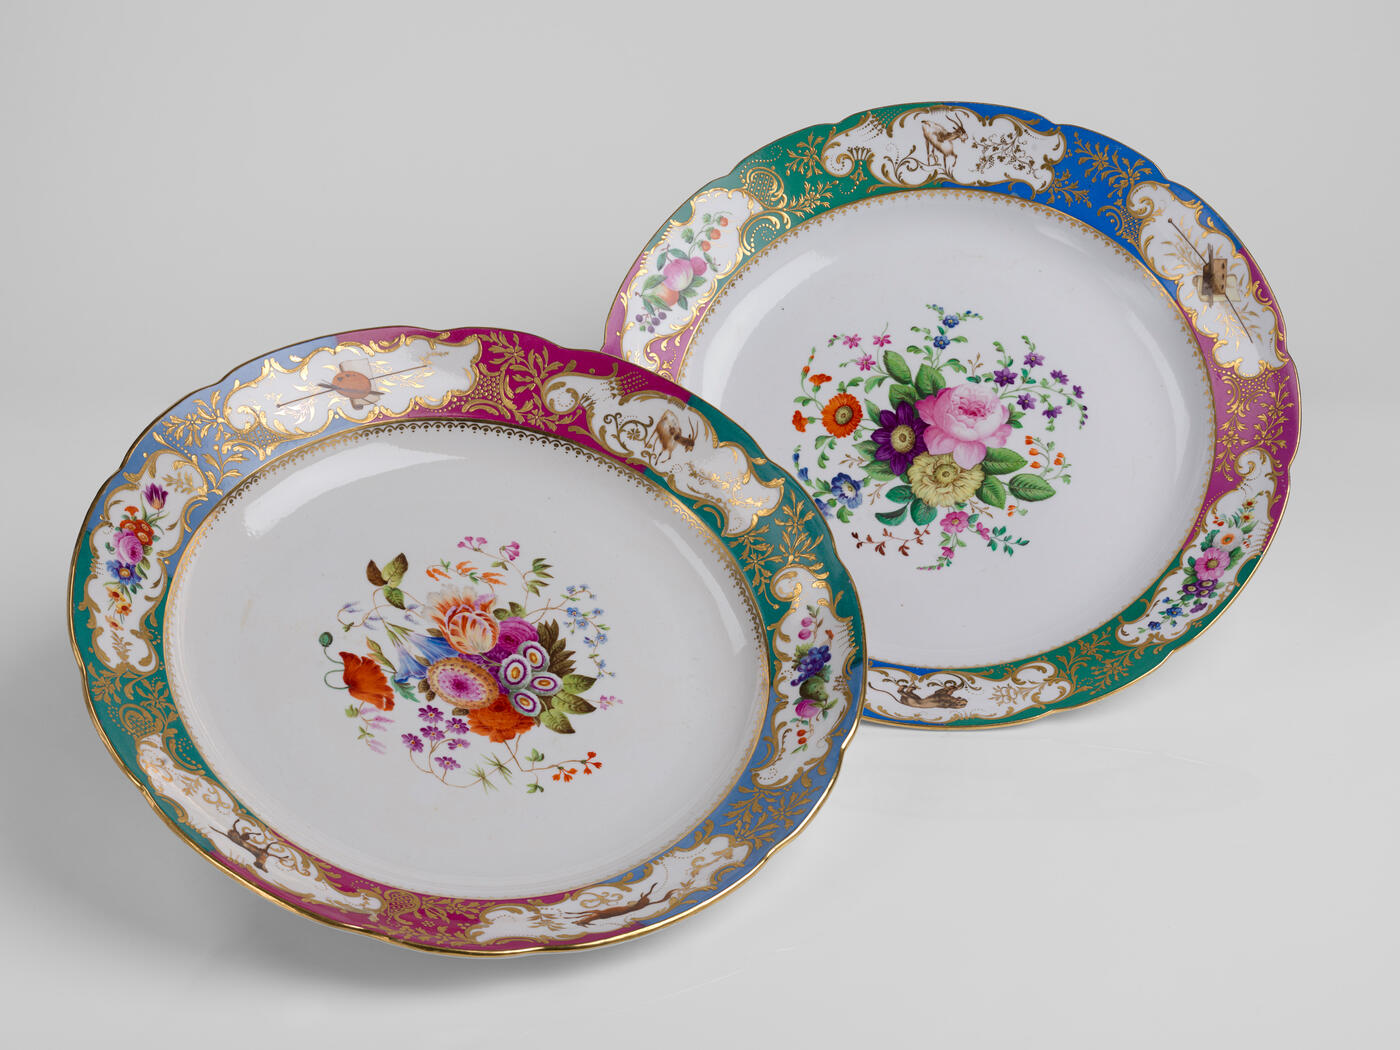 A Pair of Porcelain Platters from the Grand Duke Mikhail Pavlovich Service